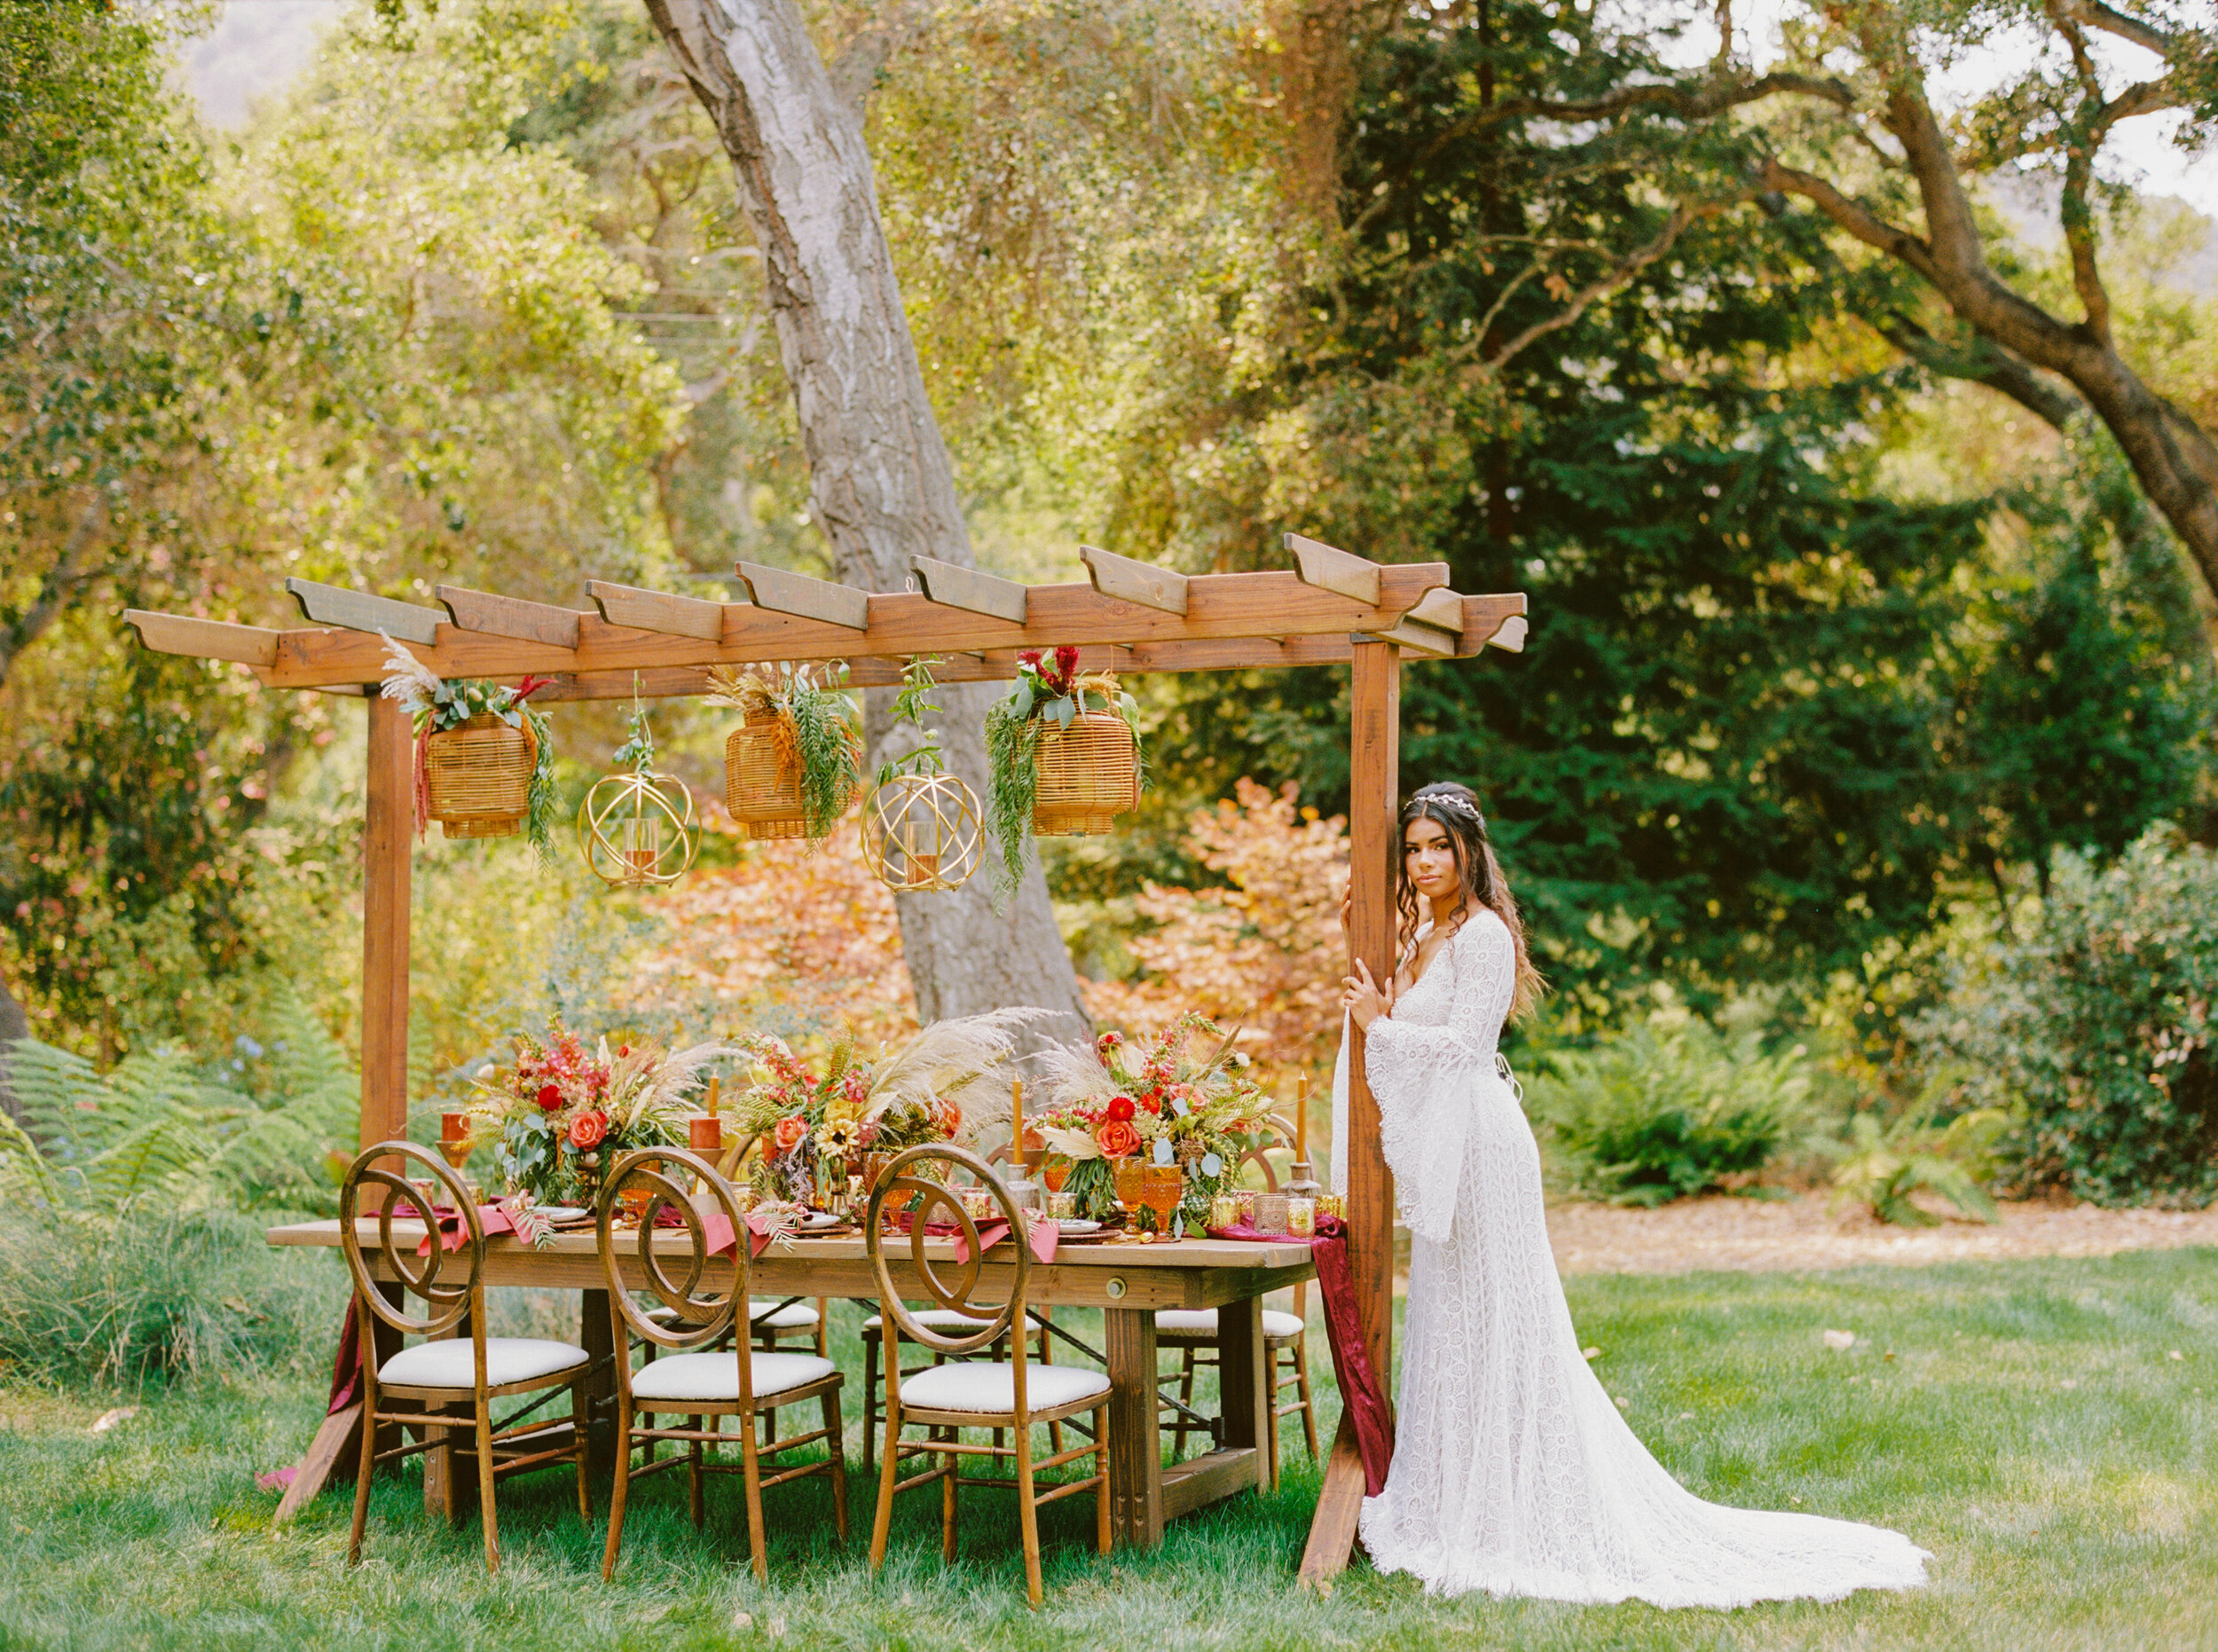 Sarahi Hadden - An Earthy Summer Boho Inspired Wedding with Sunset Hues at Gardener Ranch-2.jpg